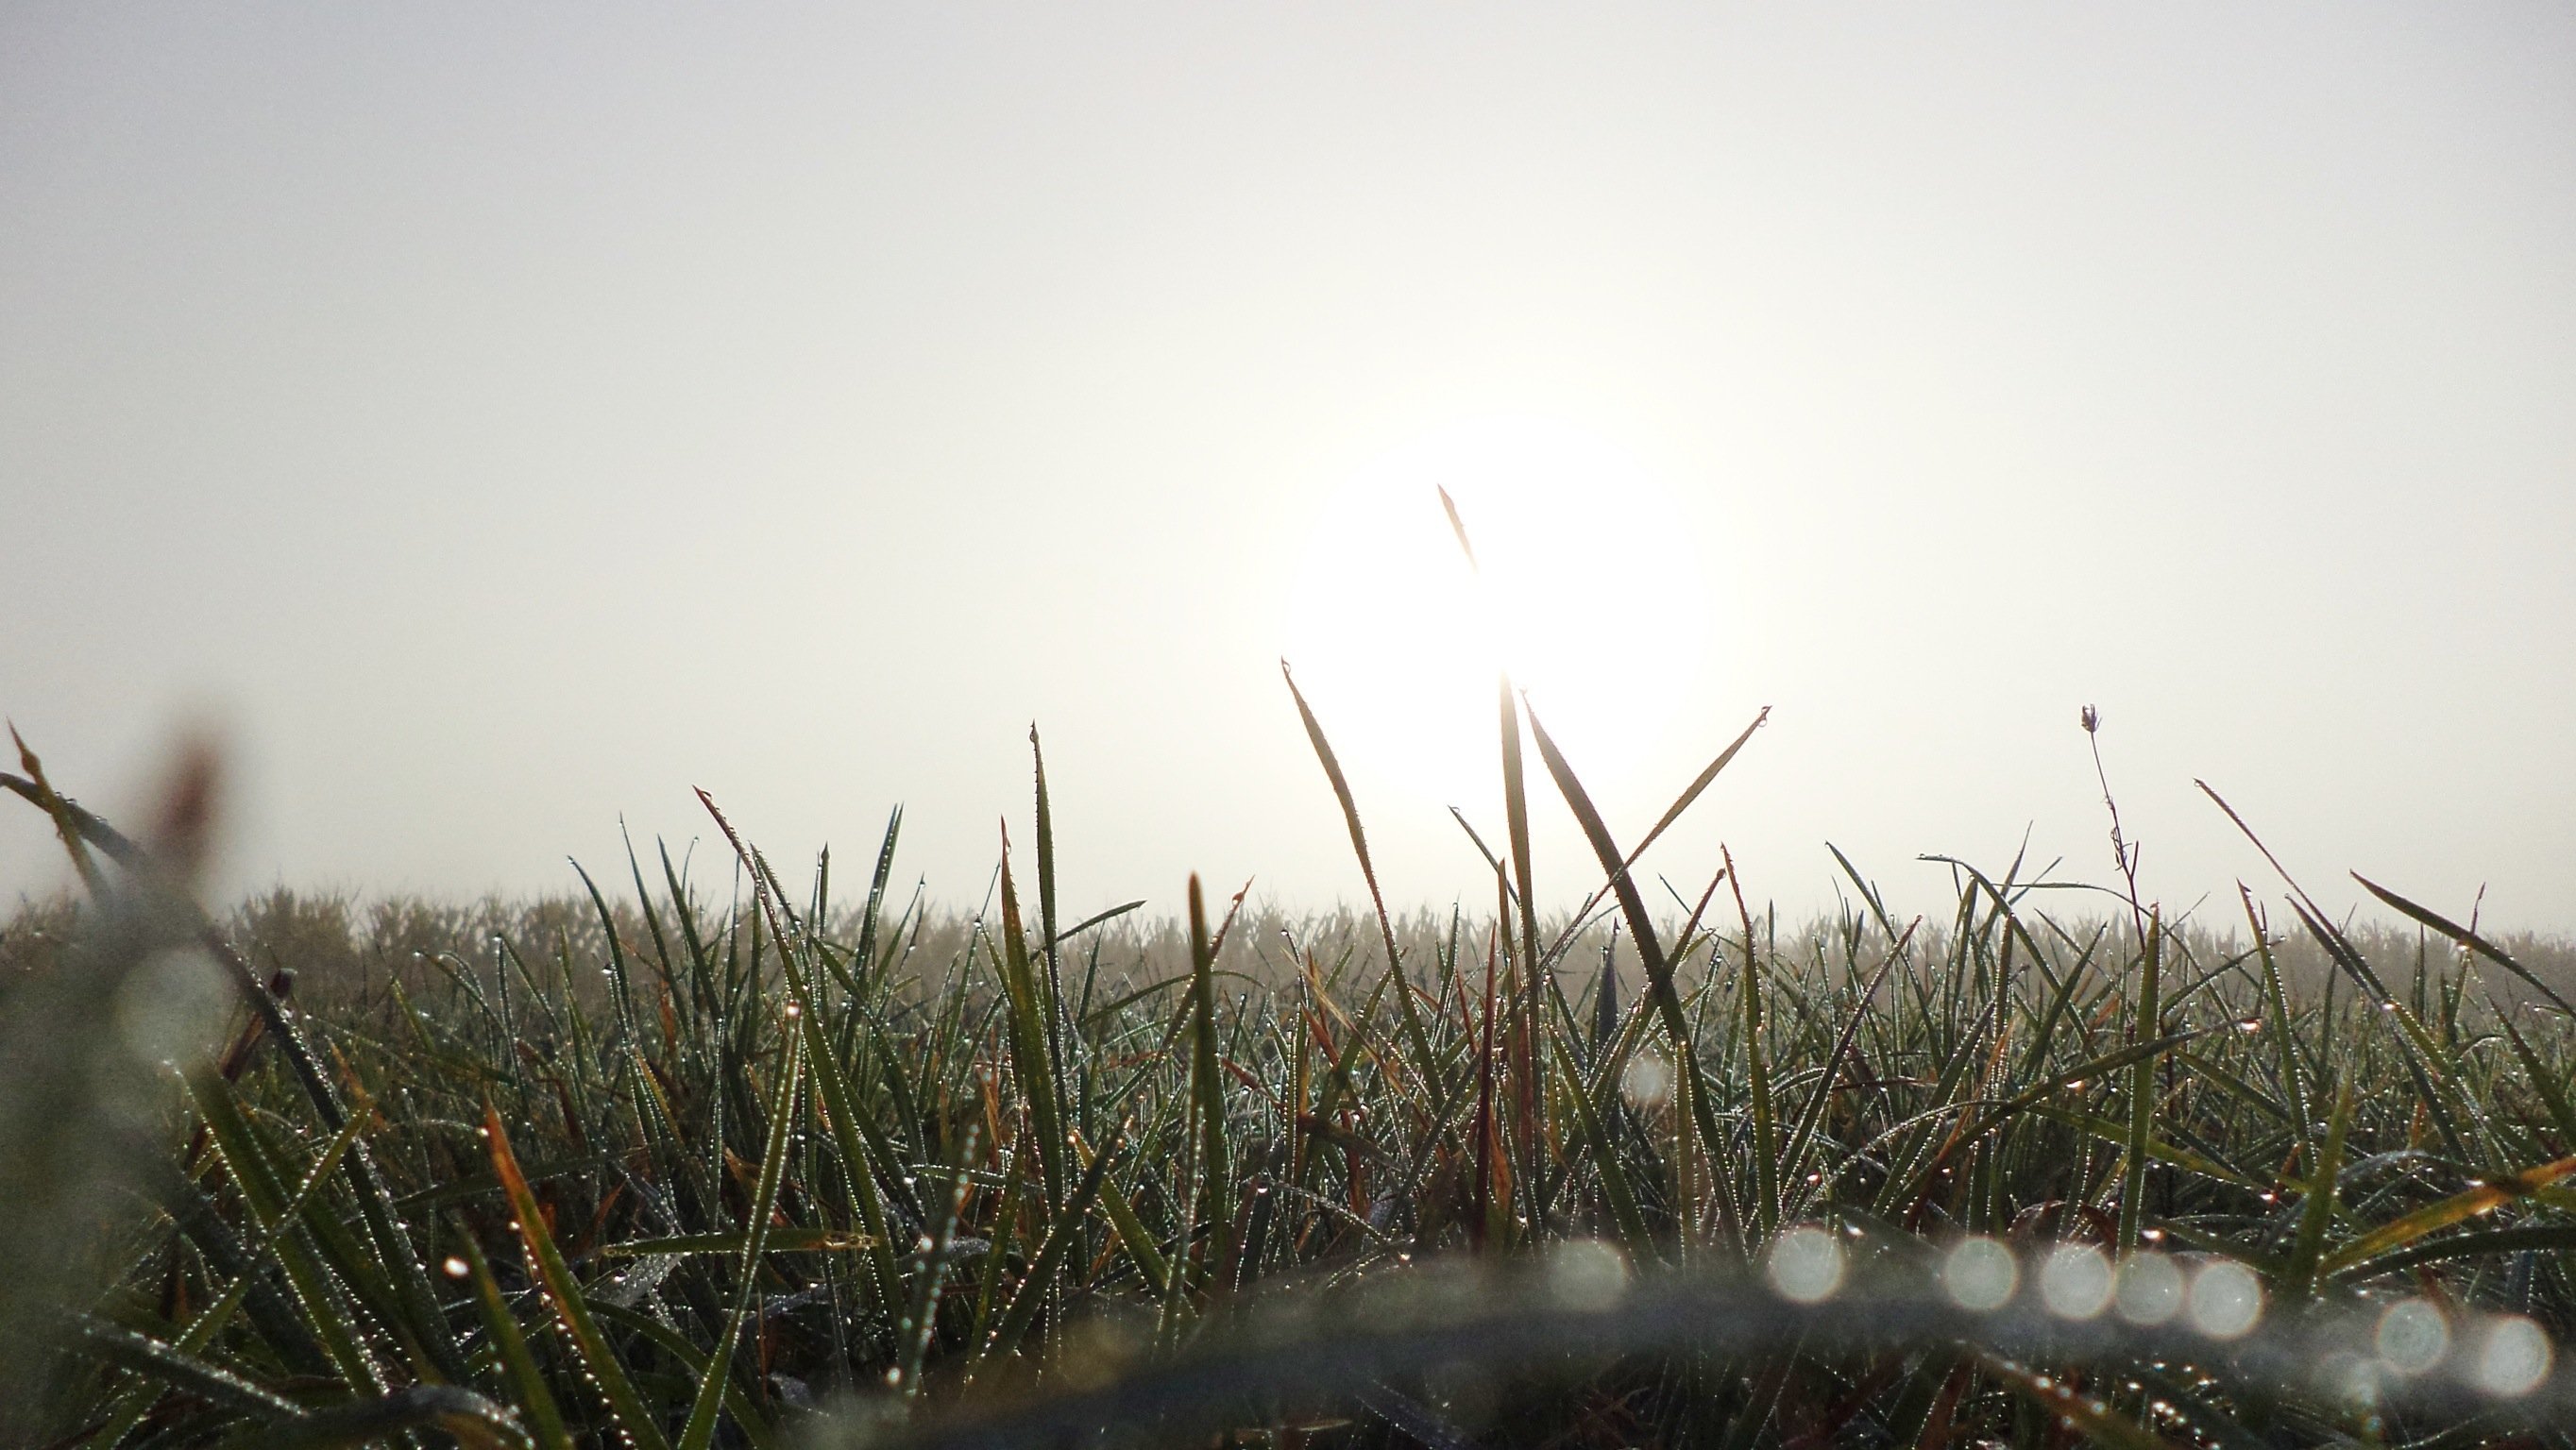 Туман над травой песня слушать. Трава в тумане. Высокая трава в тумане. Поле с высокой травой в тумане. Туман зеленая трава.